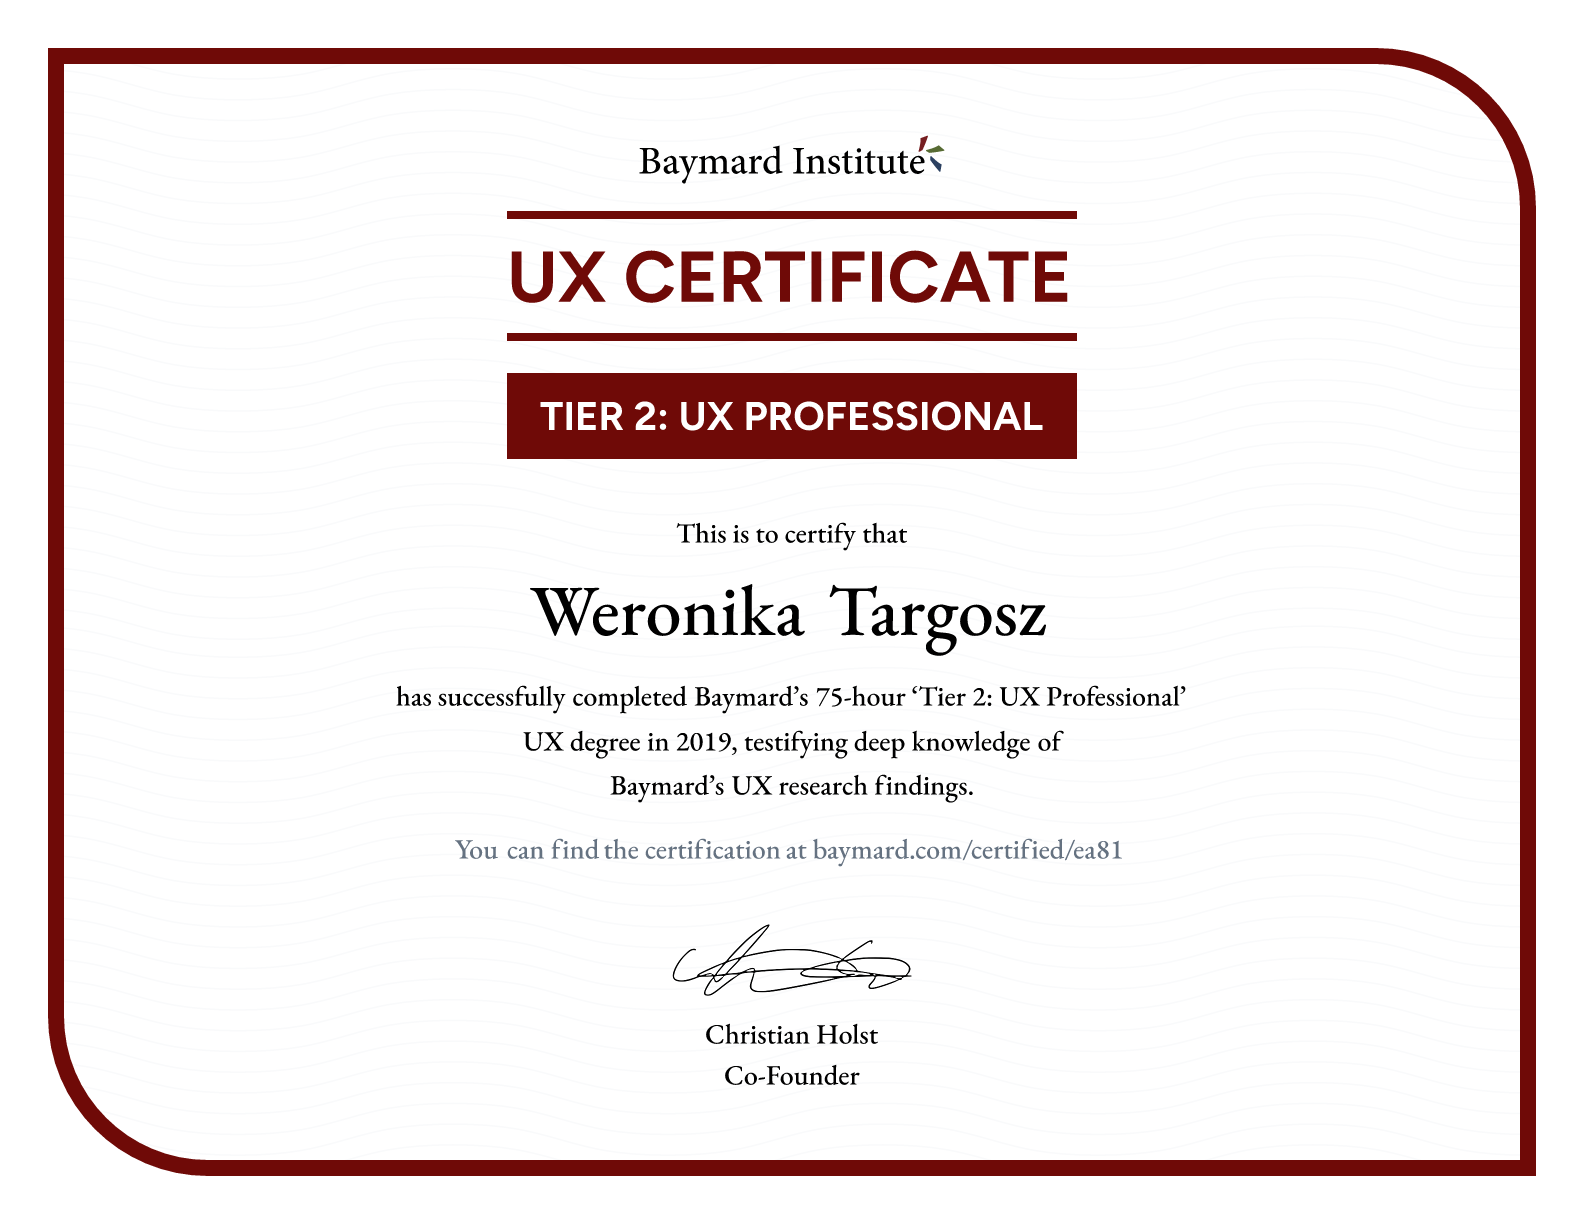 Weronika Targosz’s certificate